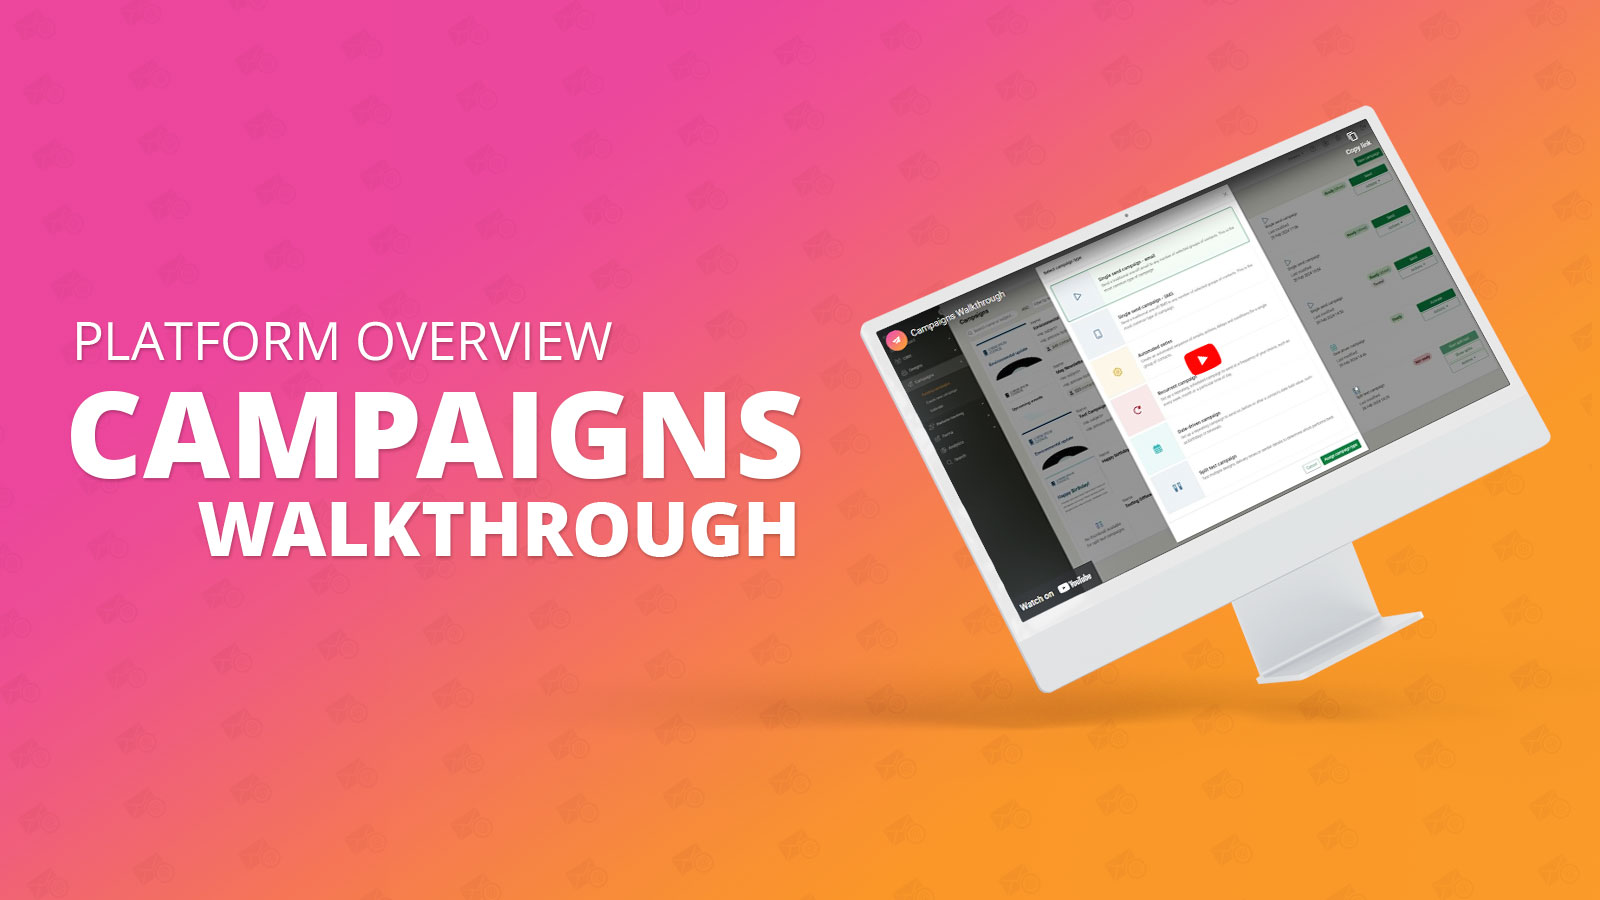 Campaigns walkthrough: Platform overview